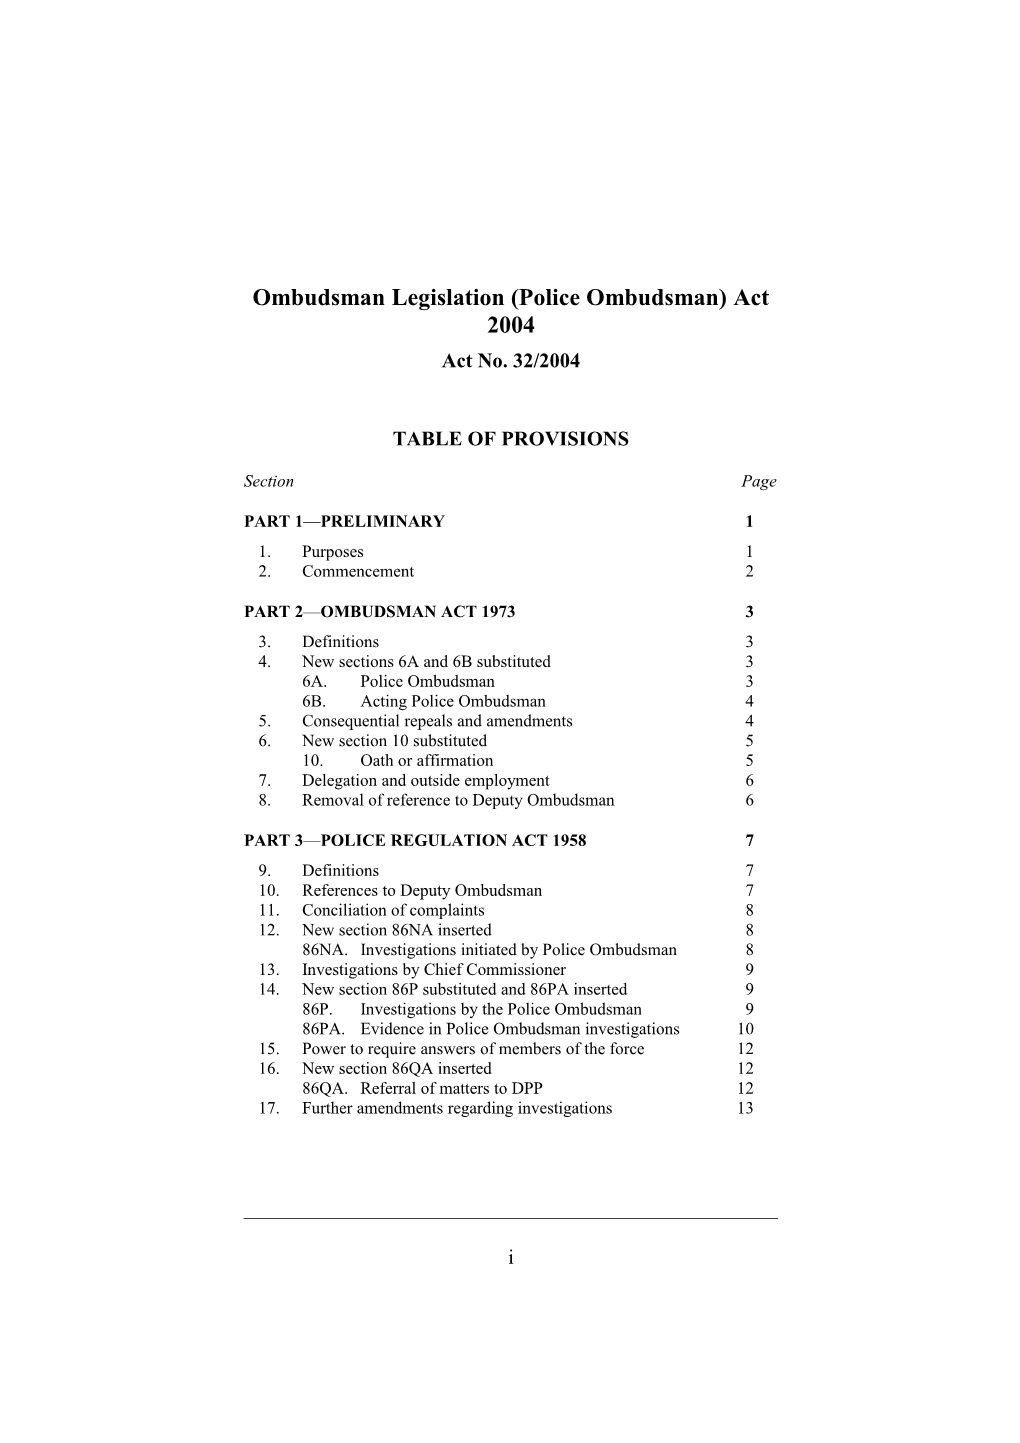 Ombudsman Legislation (Police Ombudsman) Act 2004